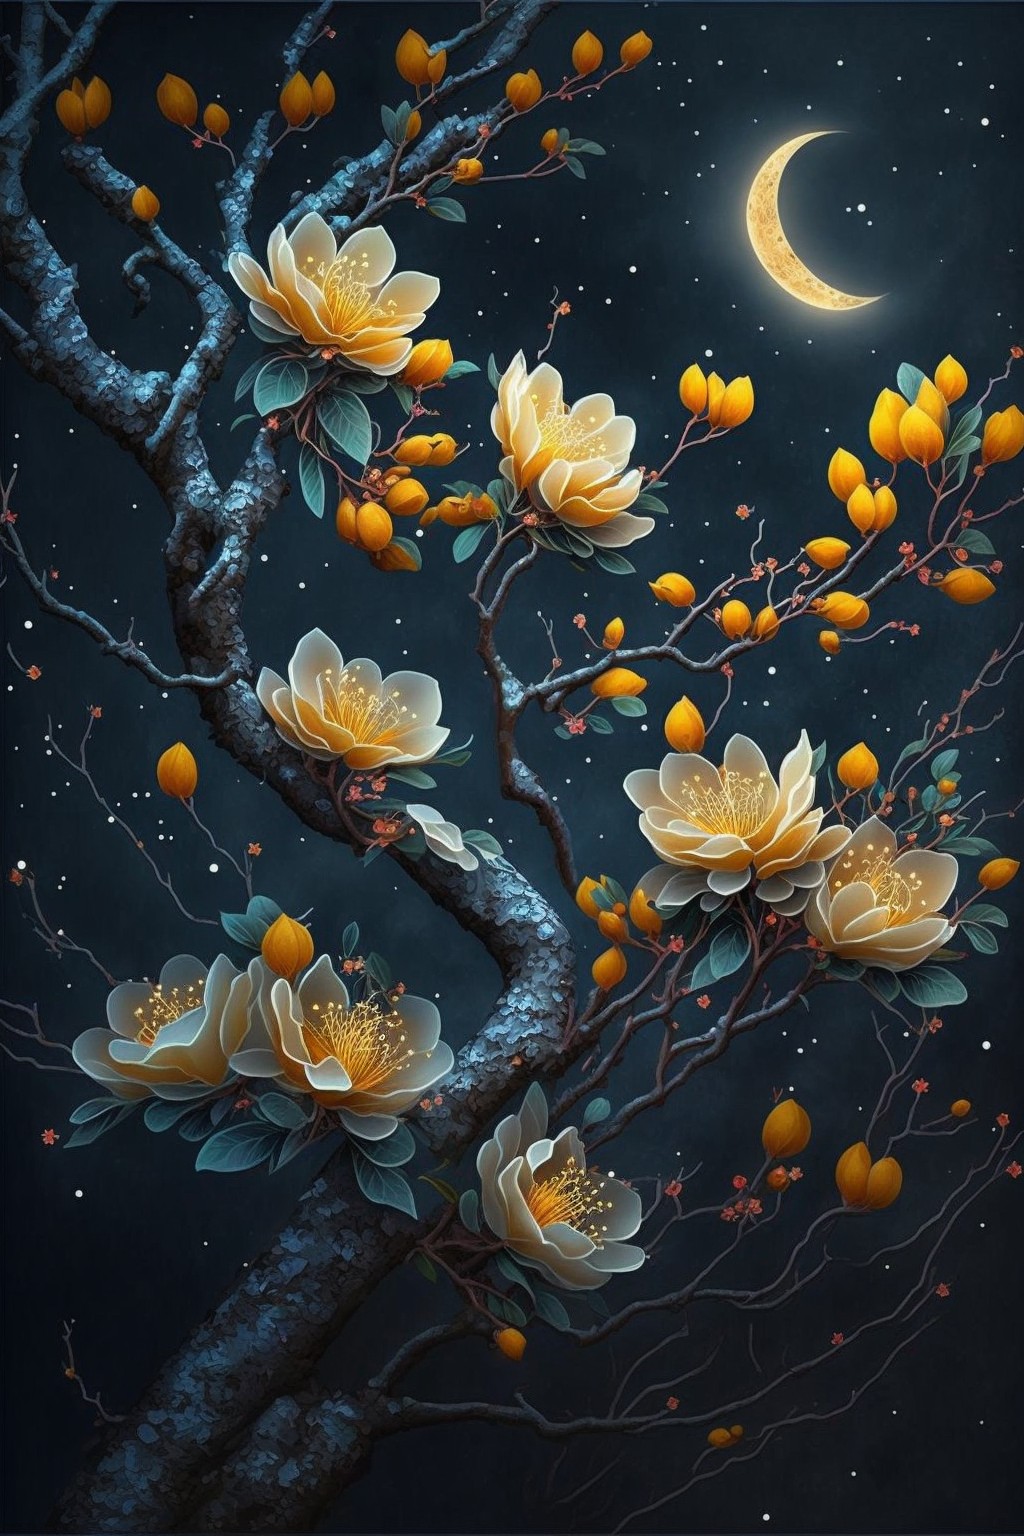 Magnolia under the moon